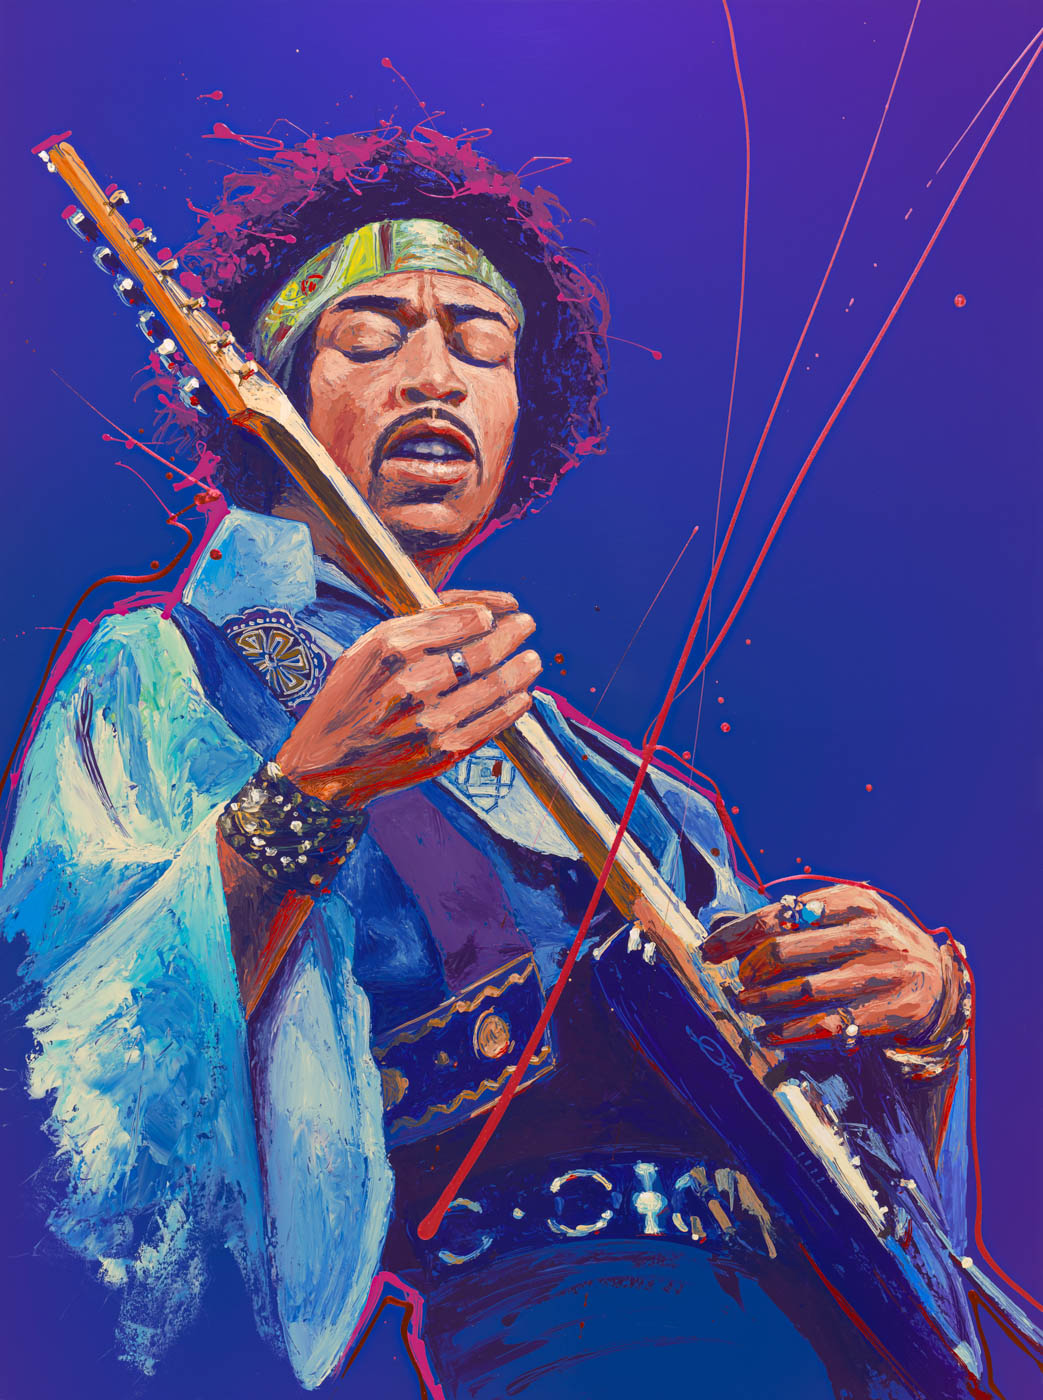 Purple Haze – Jimi Hendrix